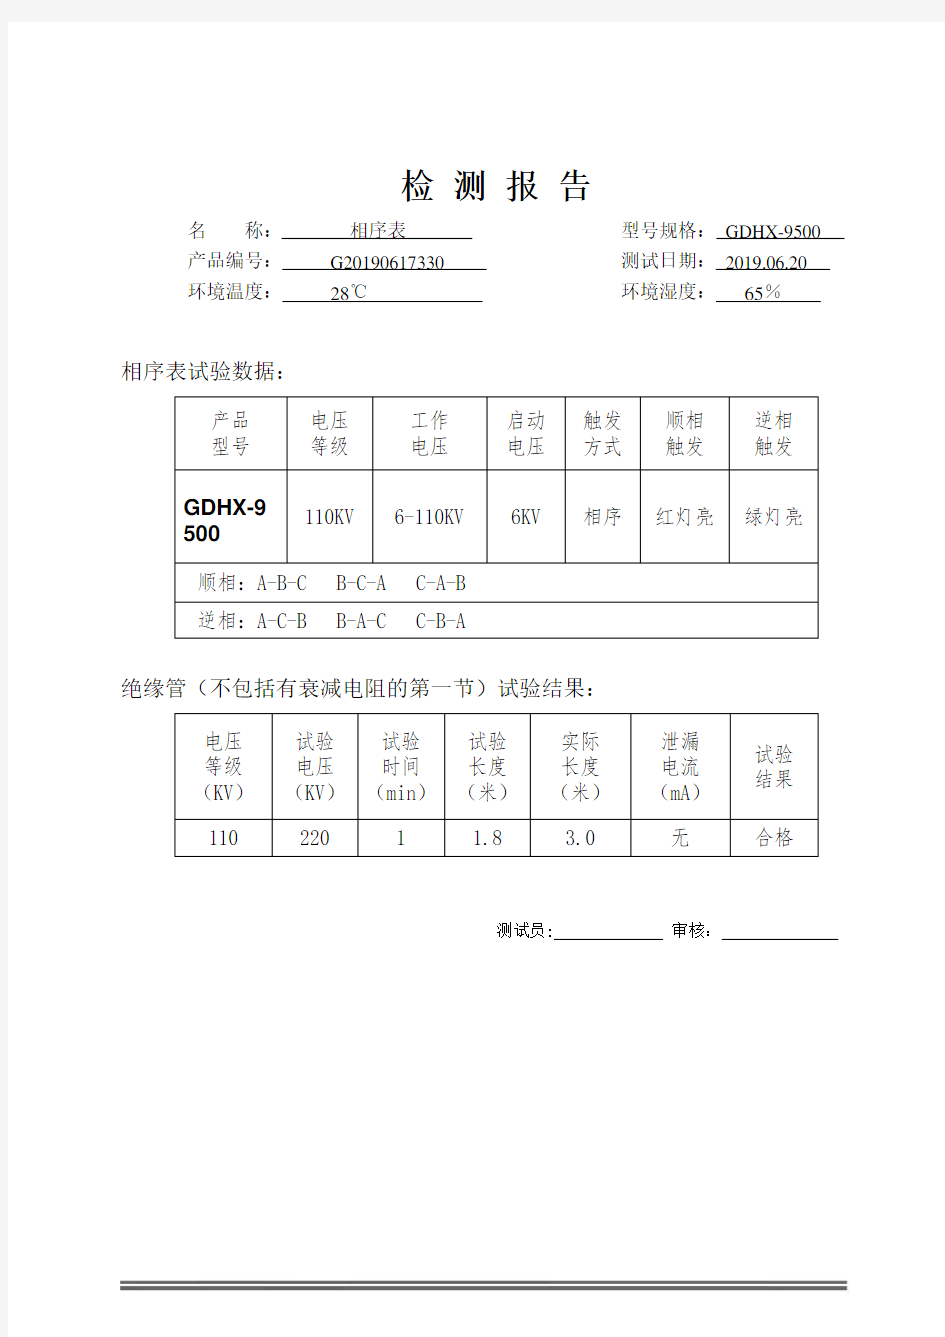 GDHX-9500相序表检测报告